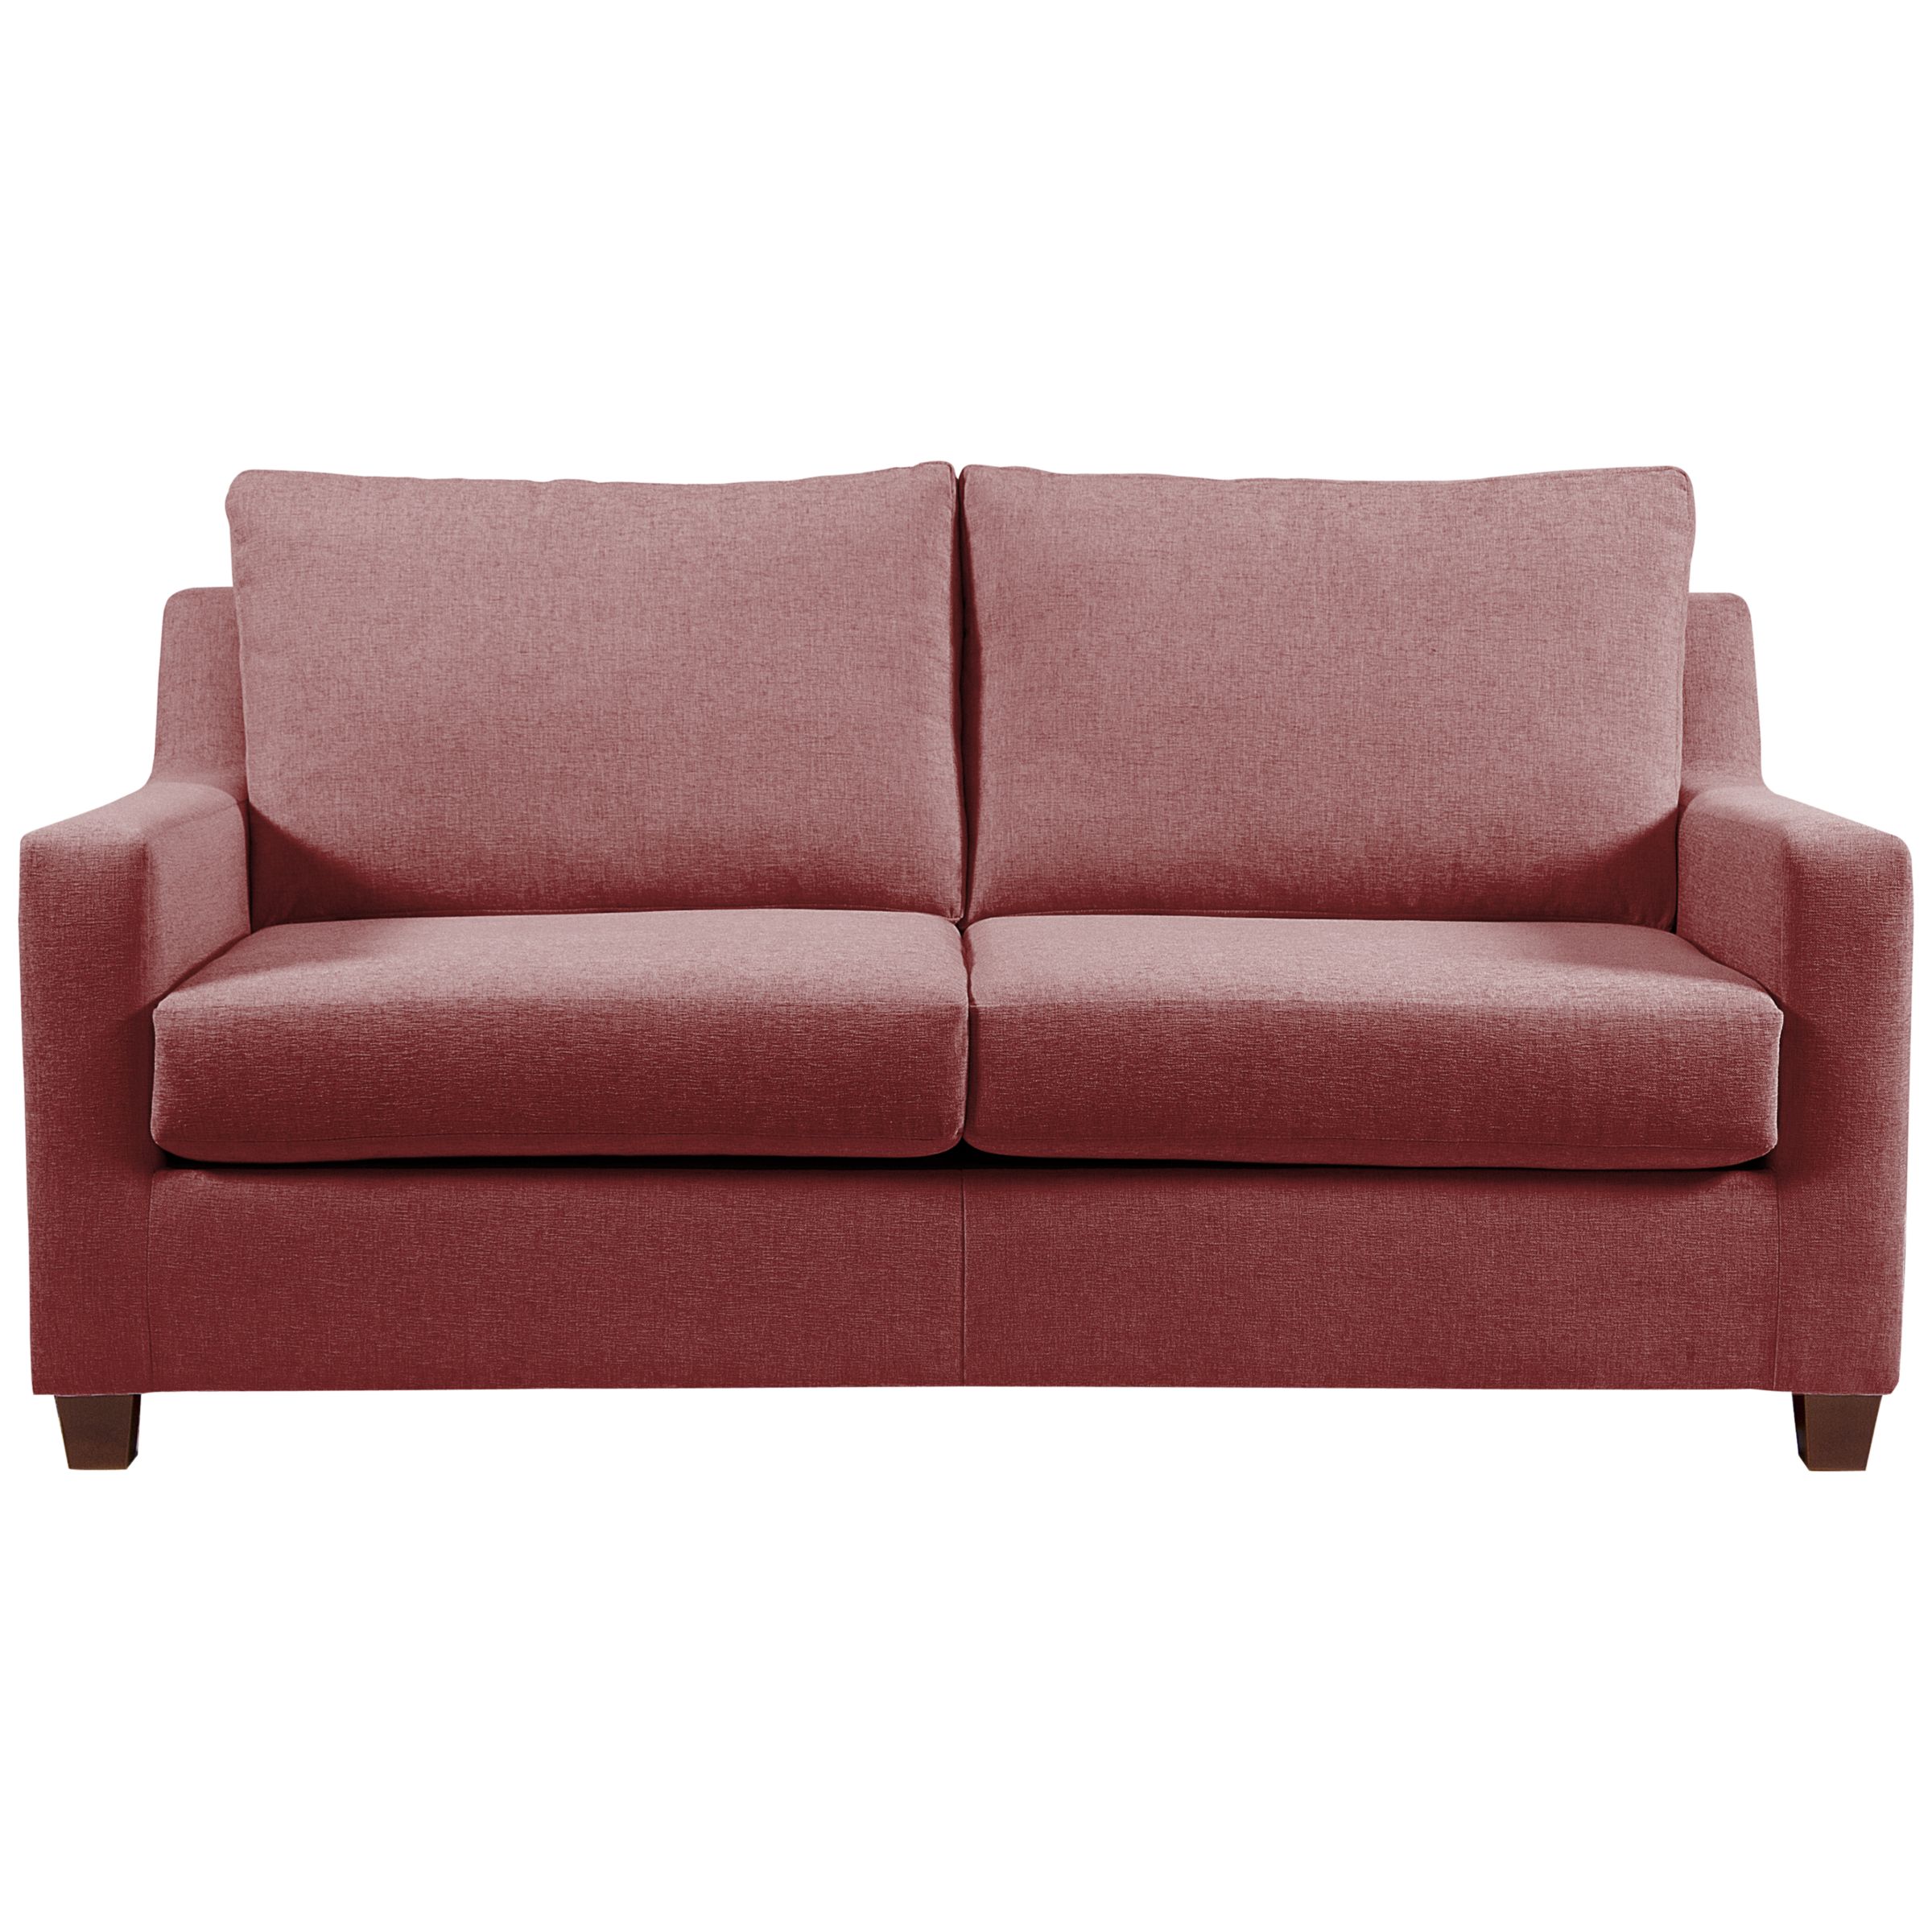 John Lewis Bizet Medium Sofa Bed with Memory Foam Mattress, Red, width 178cm